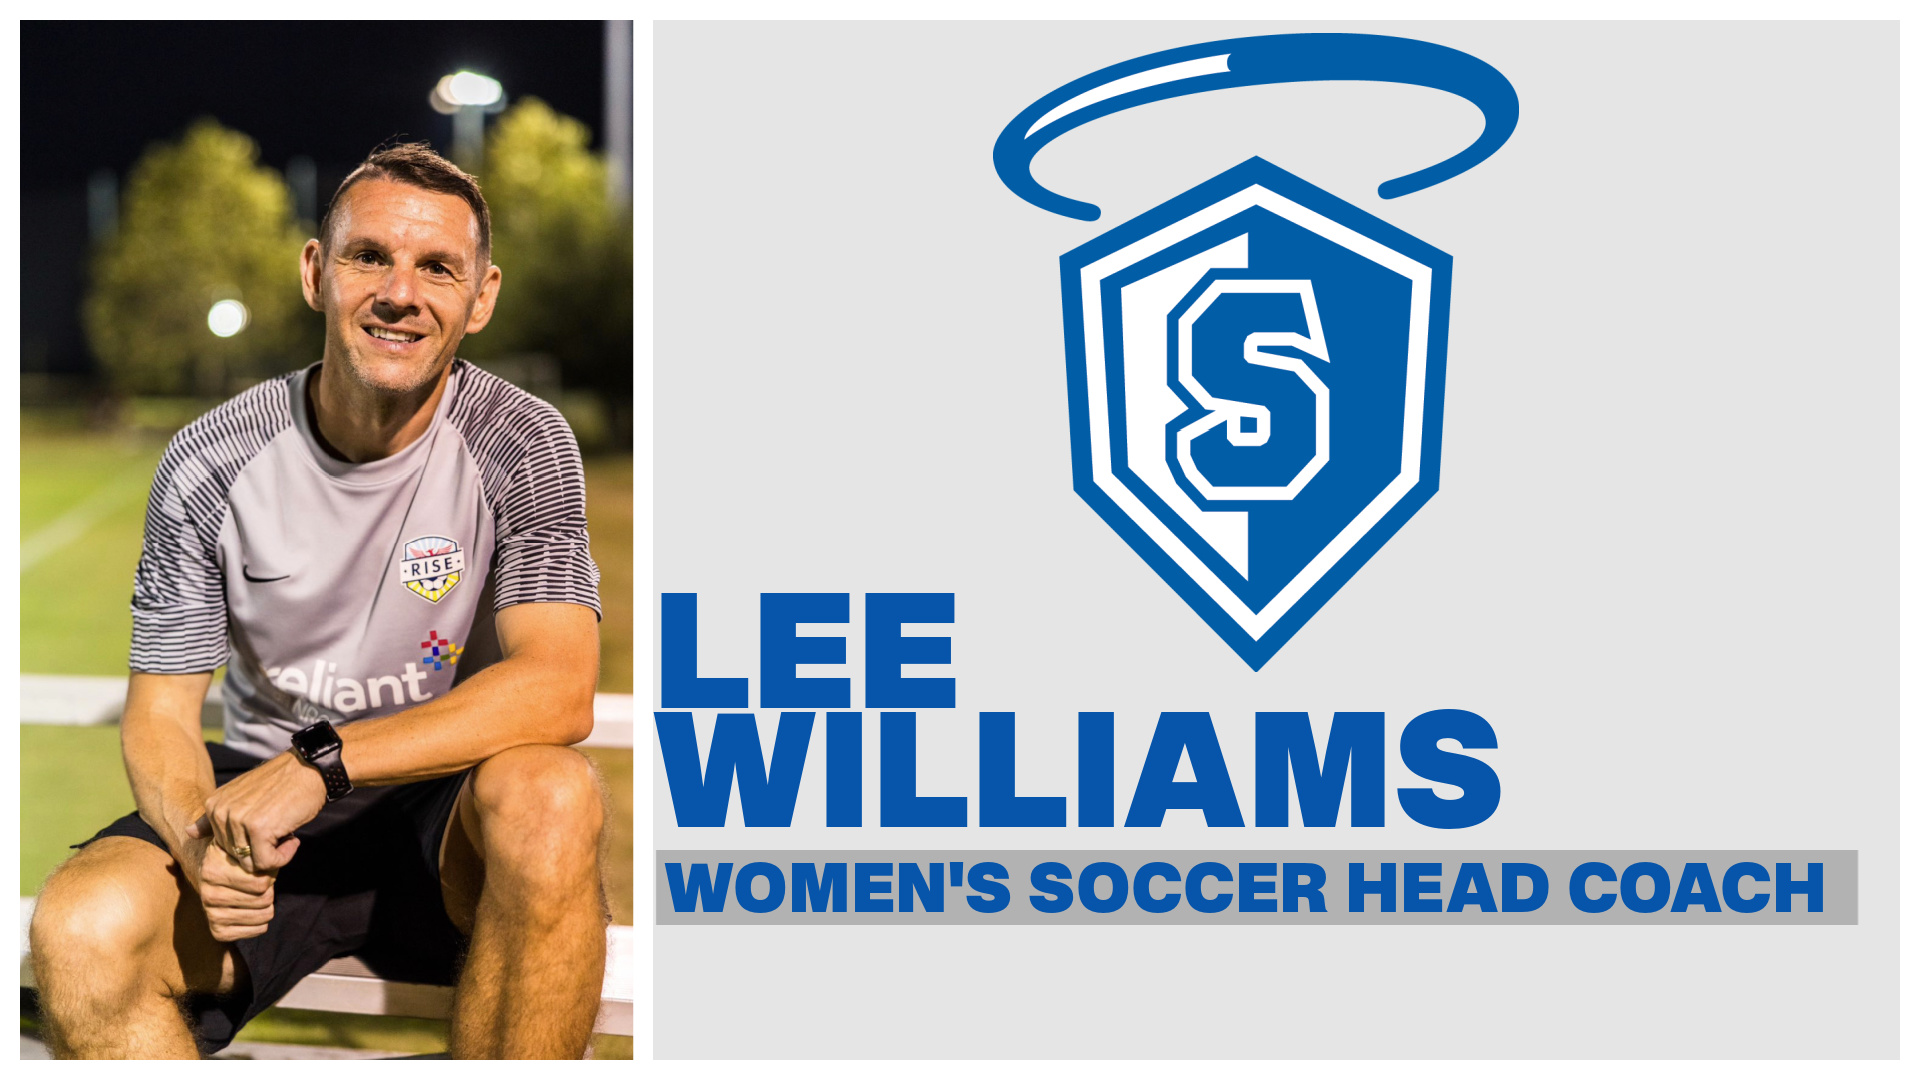 Lee Williams Named Women's Soccer Head Coach at OLLU